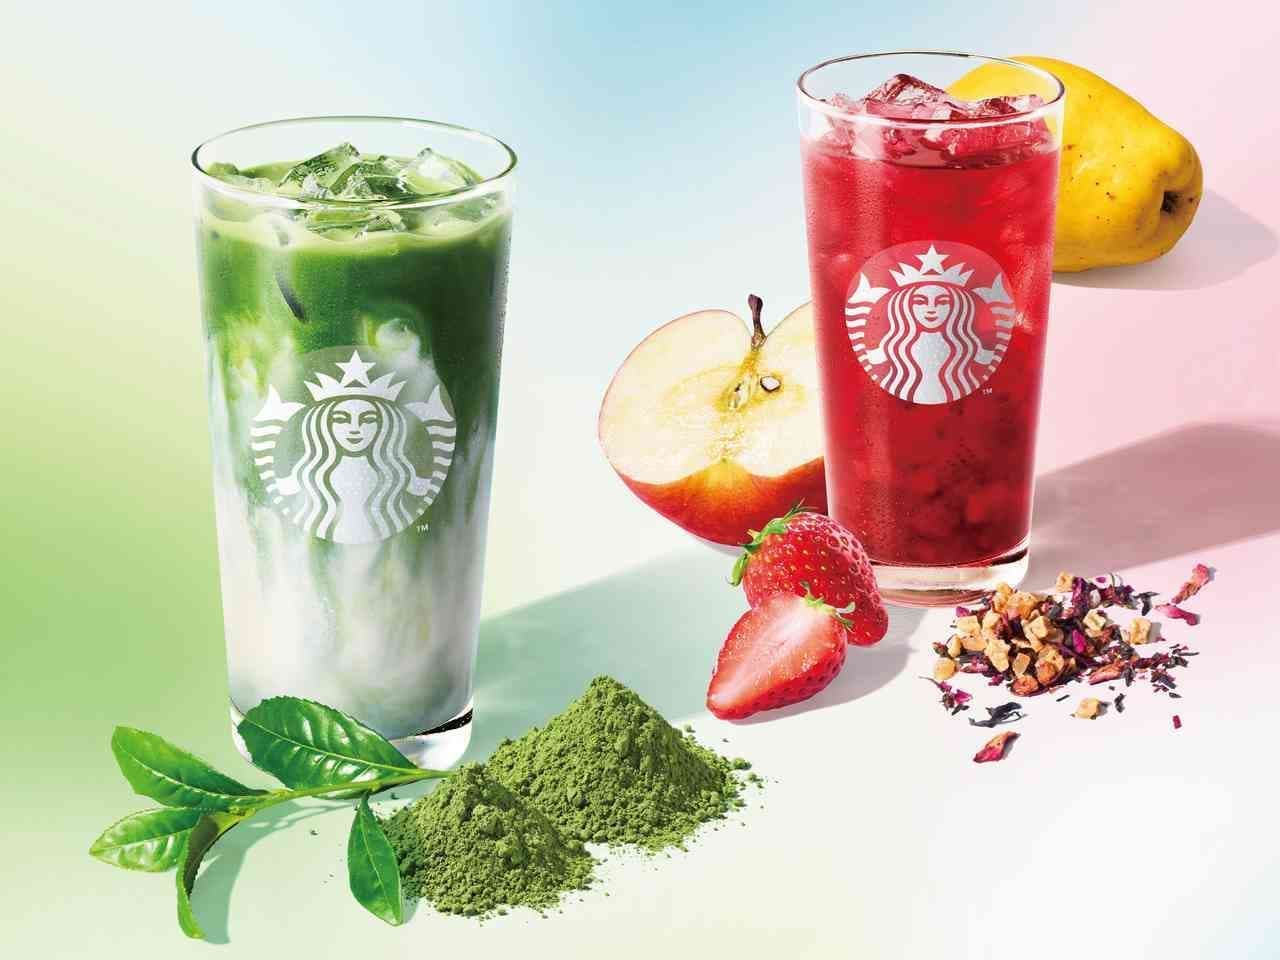 Starbucks "Double Matcha Tea Latte" and "Strawberry & Yewsberry Tea